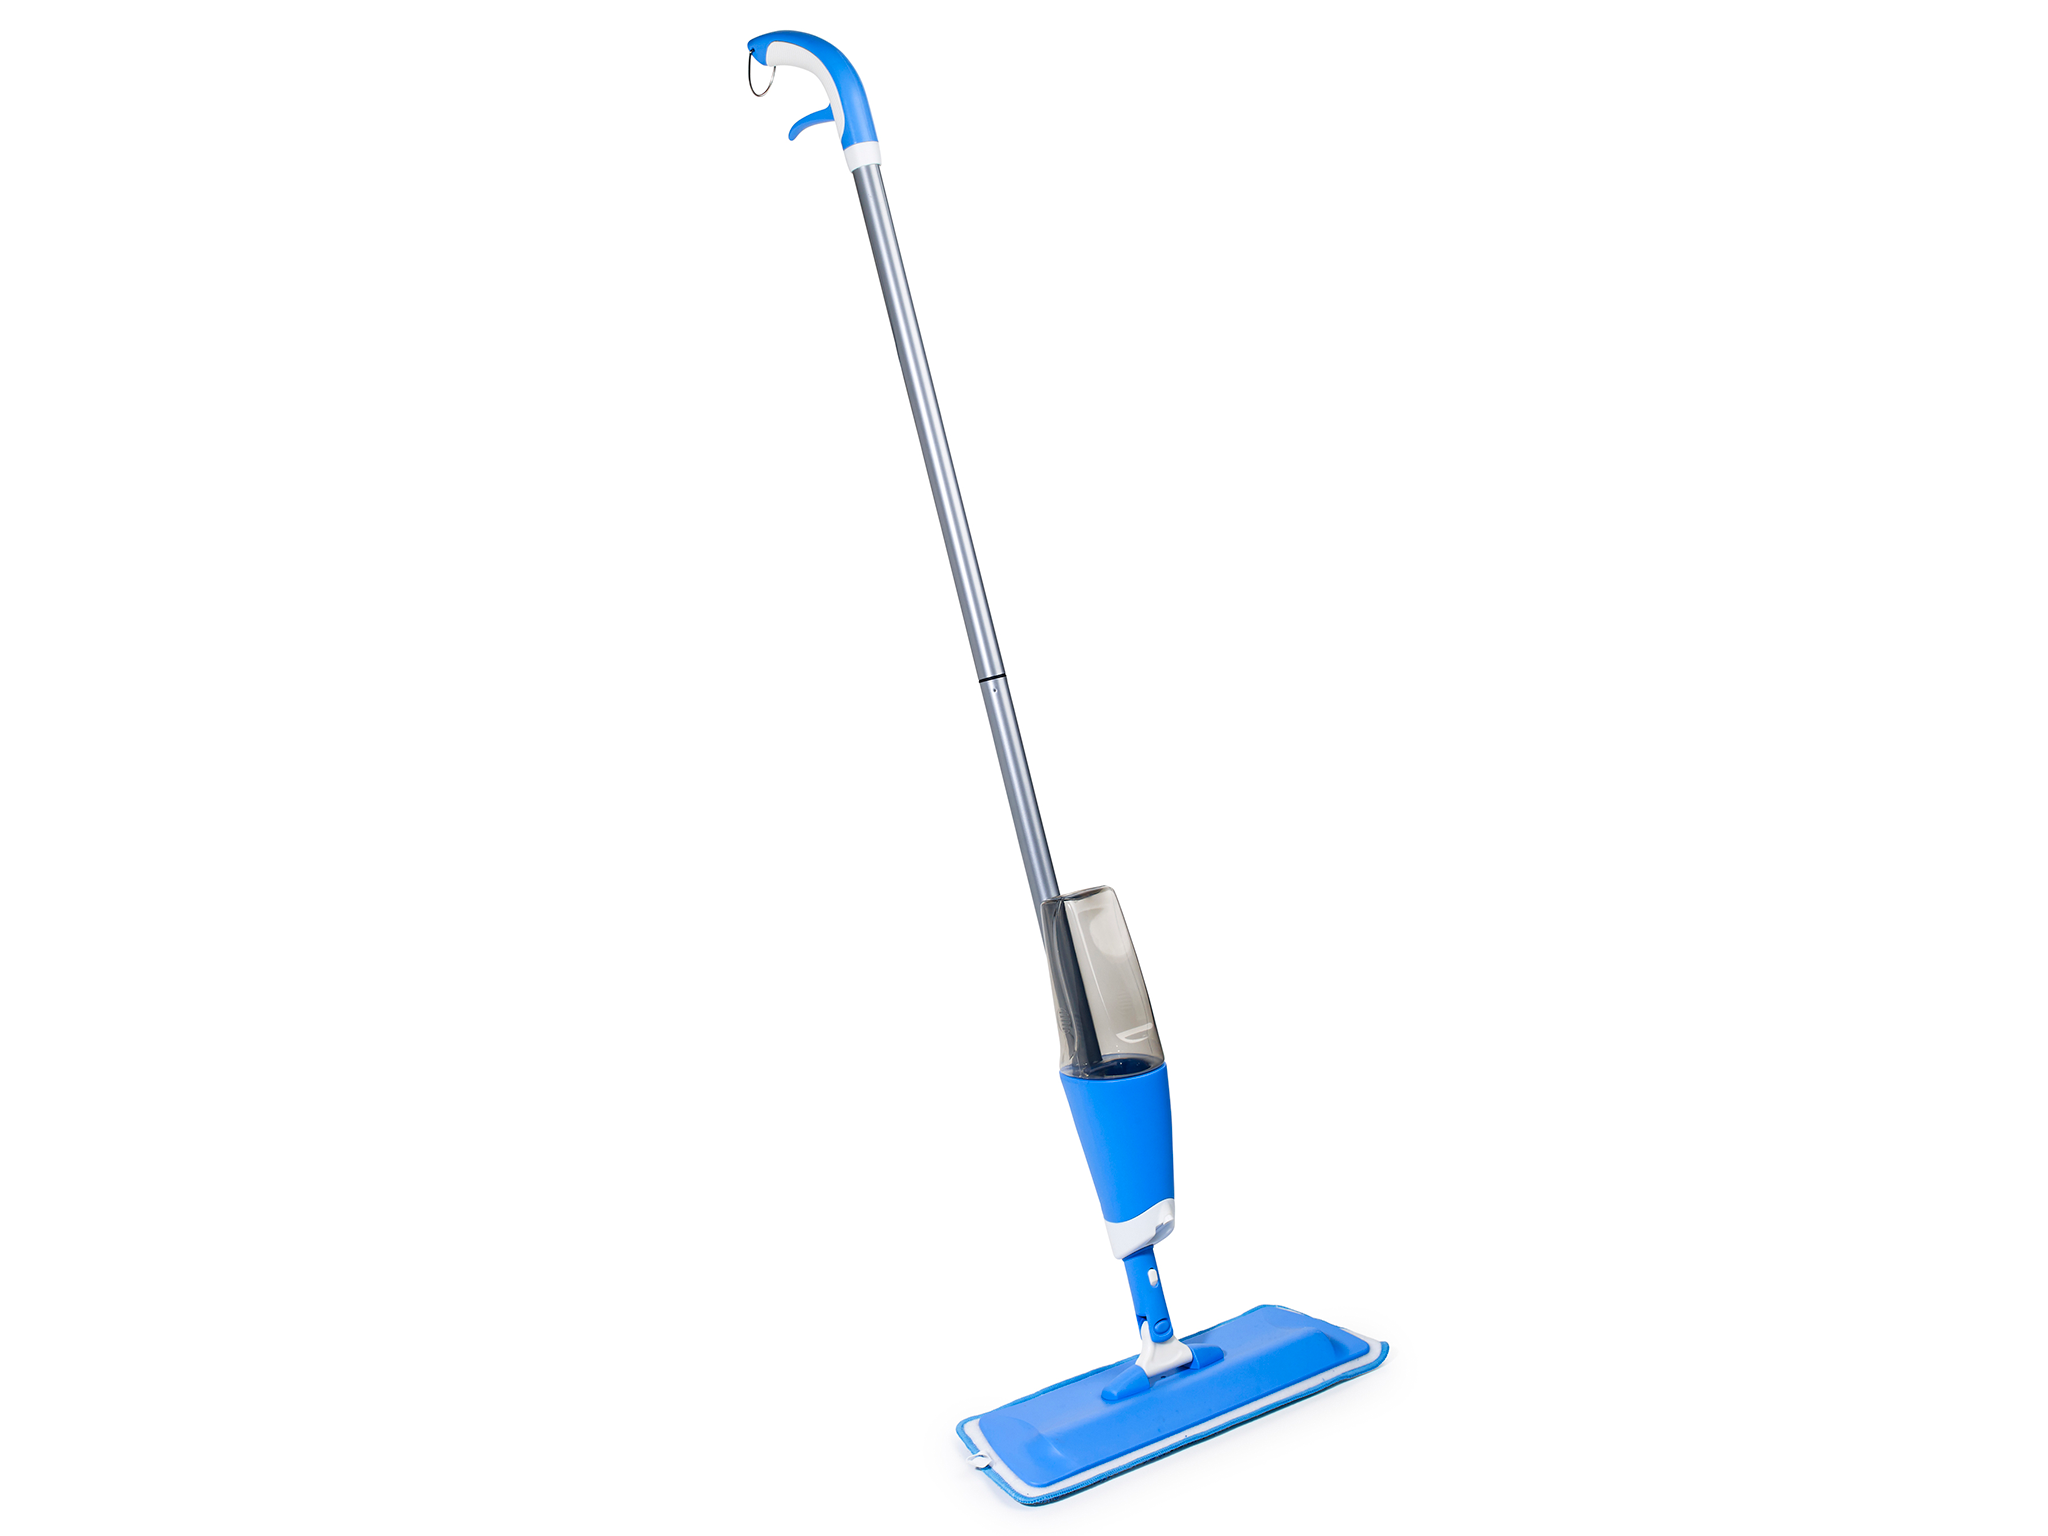 Lakeland hard floor spray mop